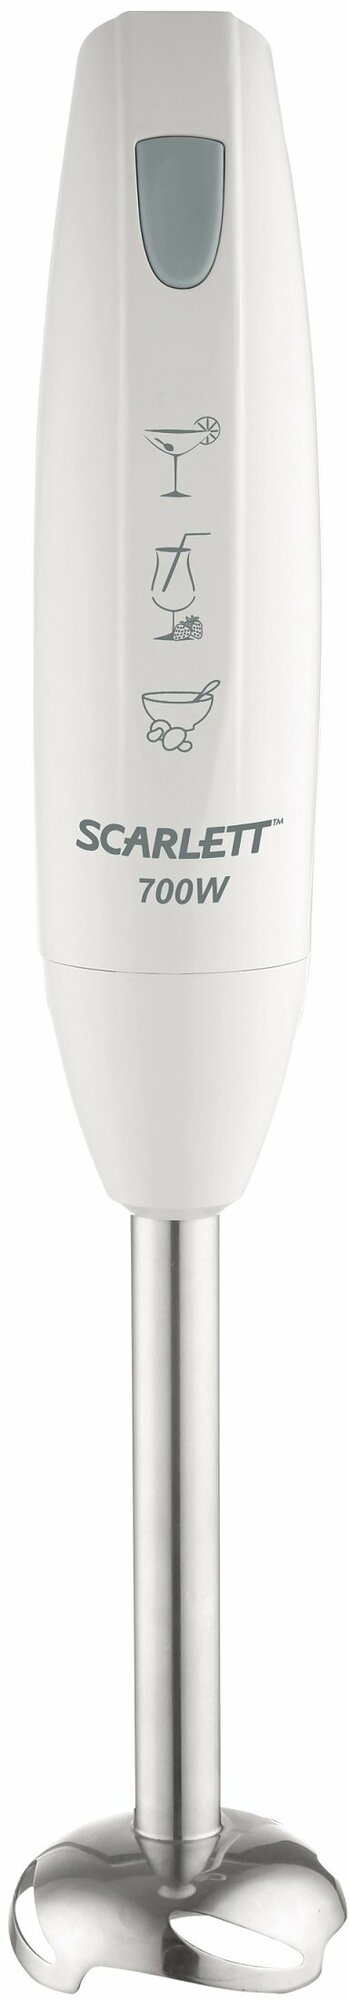 Погружной блендер Scarlett SC-HB42S09, белый/серый